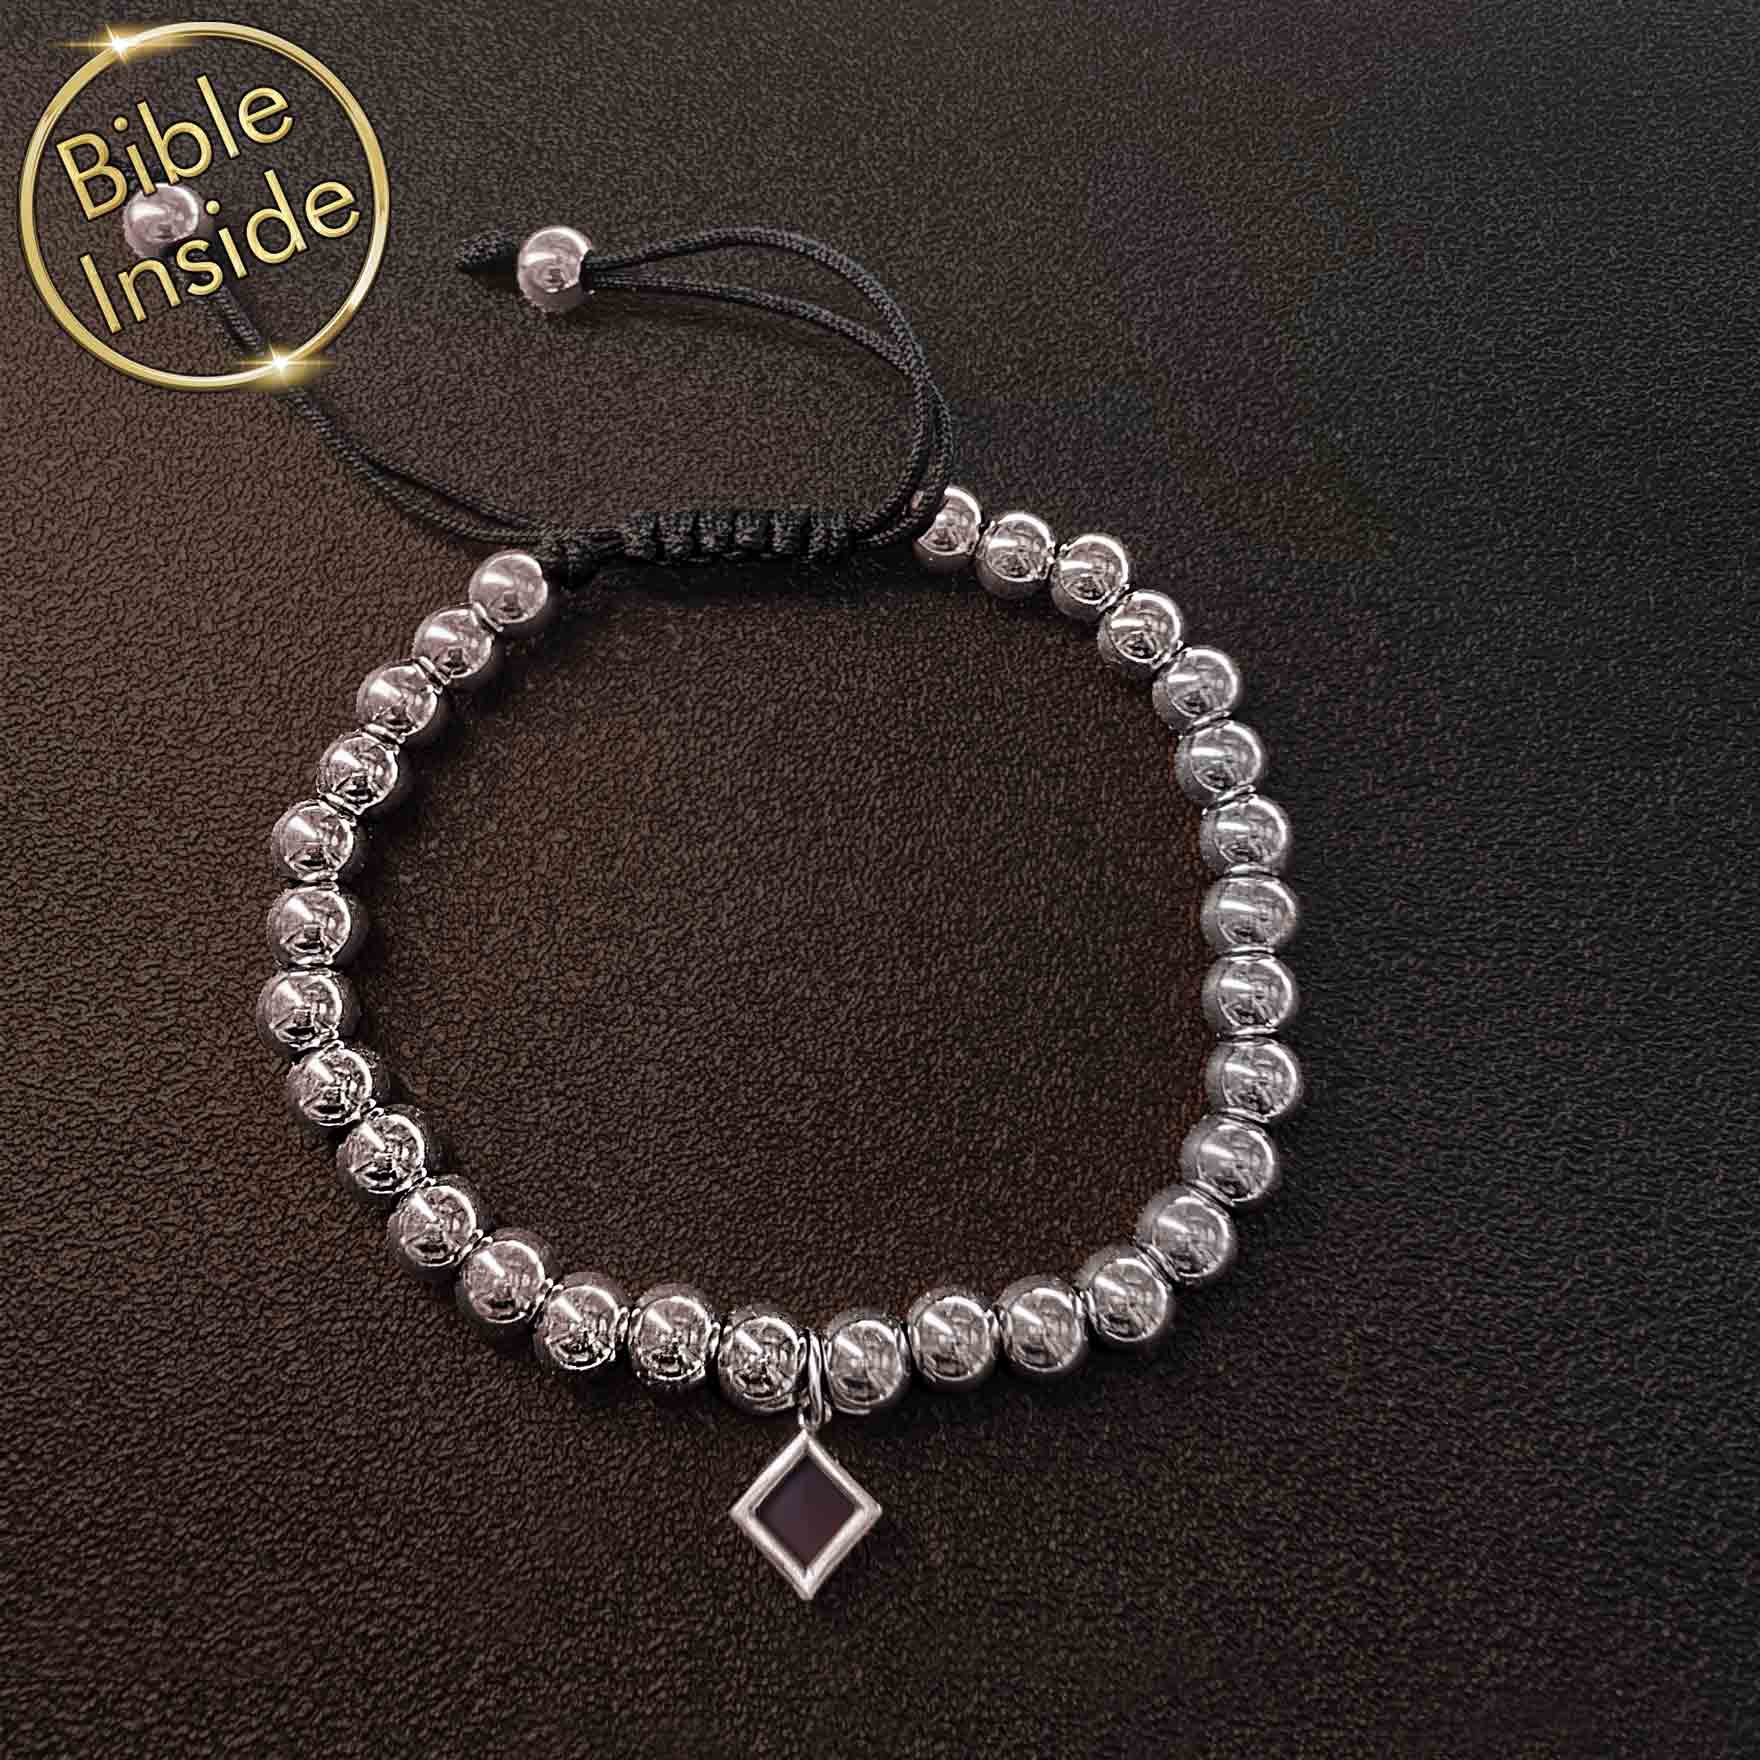 Christian Beads Bracelets With Nano Bible - Nano Jewelry